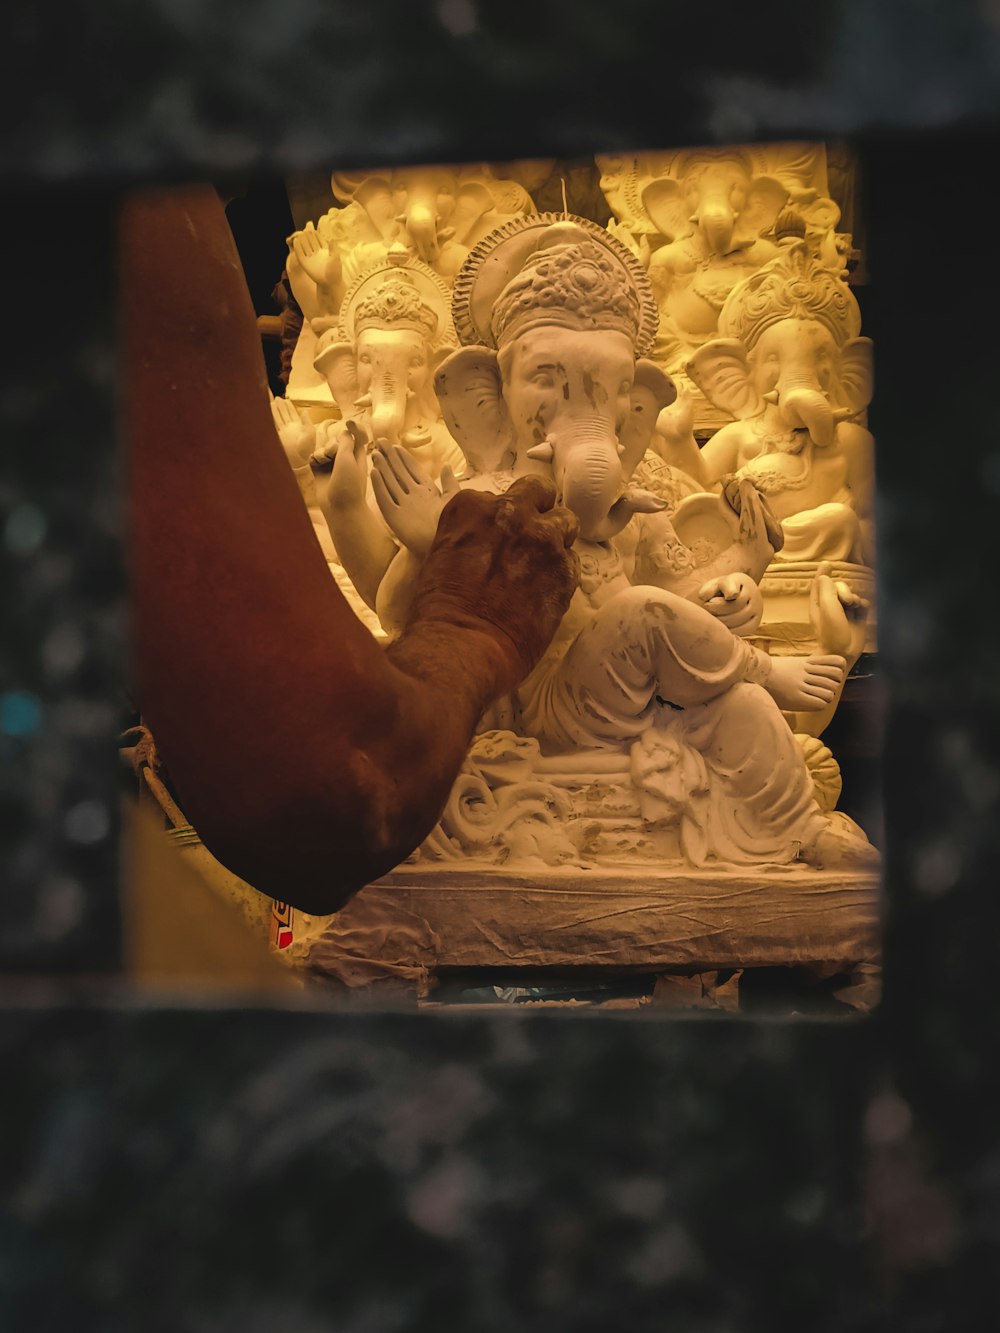 a hand touching a statue of a buddha